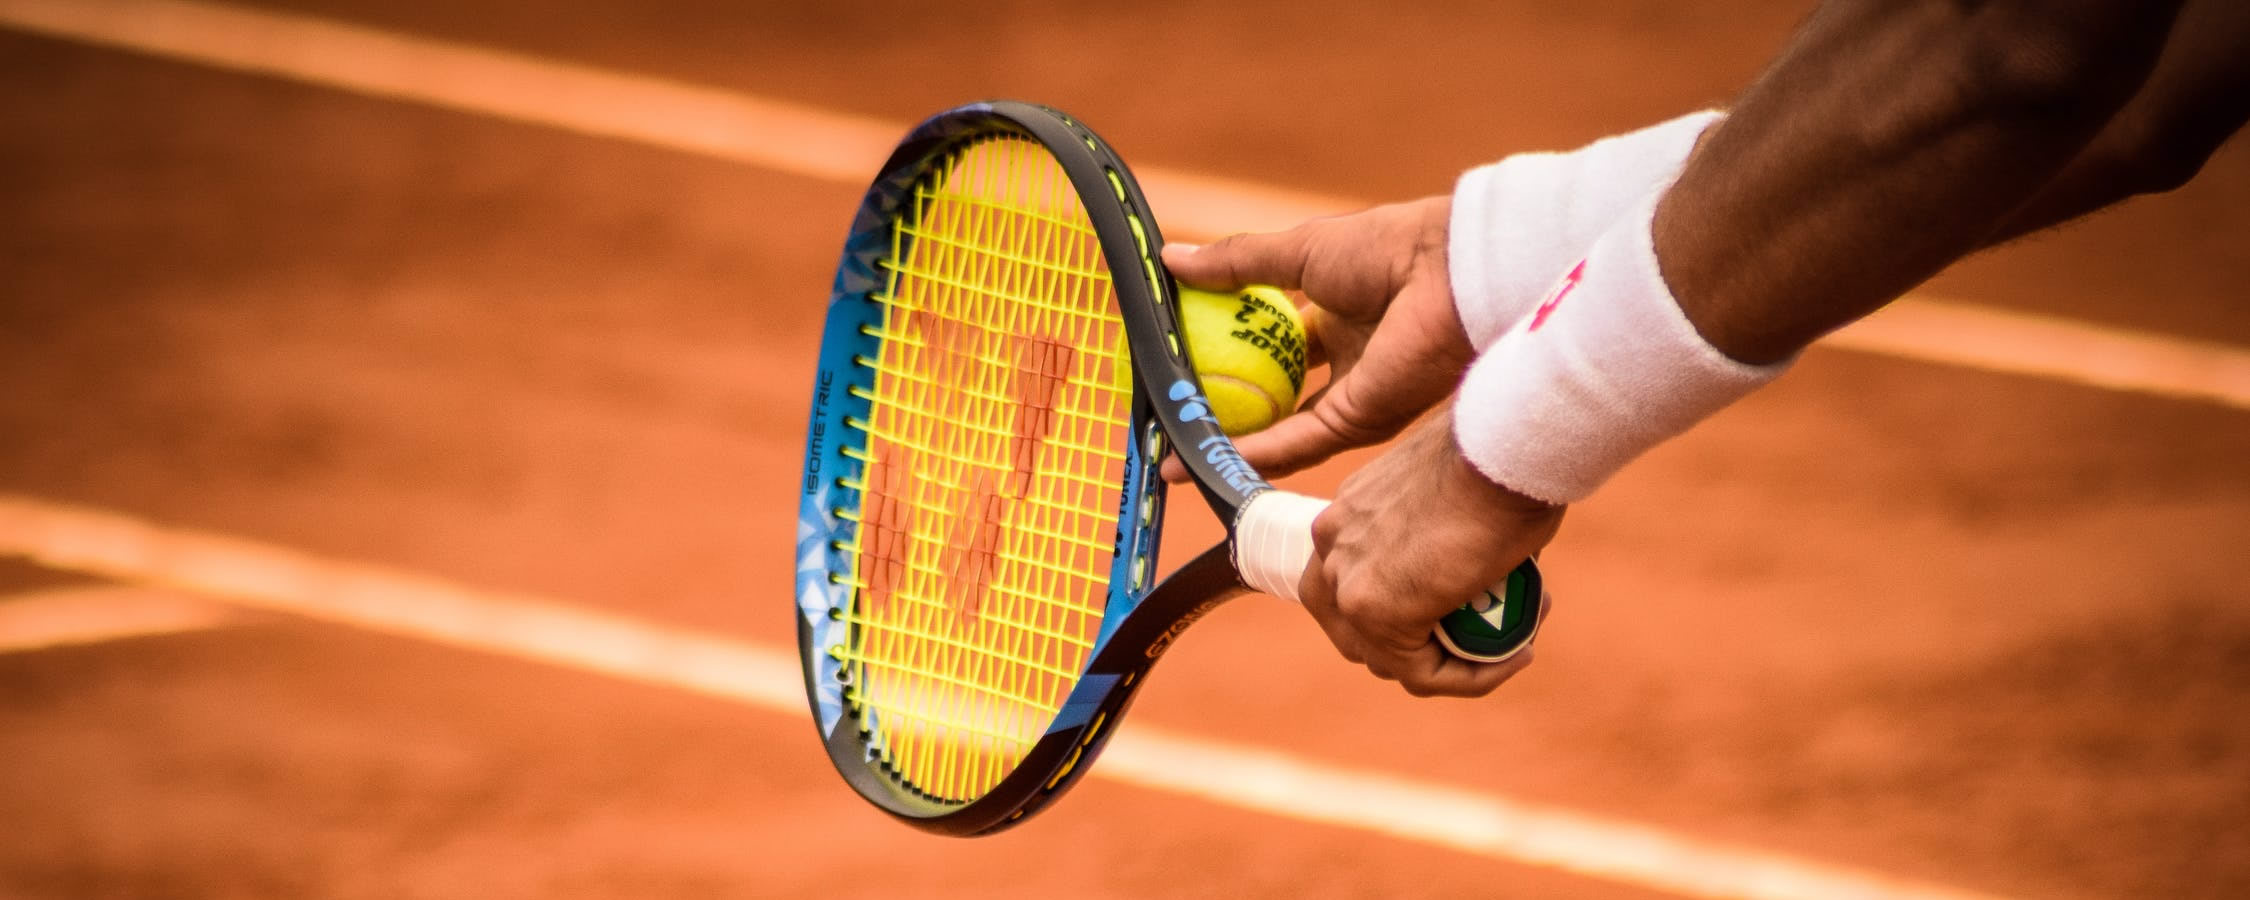 yüksek tansiyona karşı tenis kalp atış hızında ani düşüş